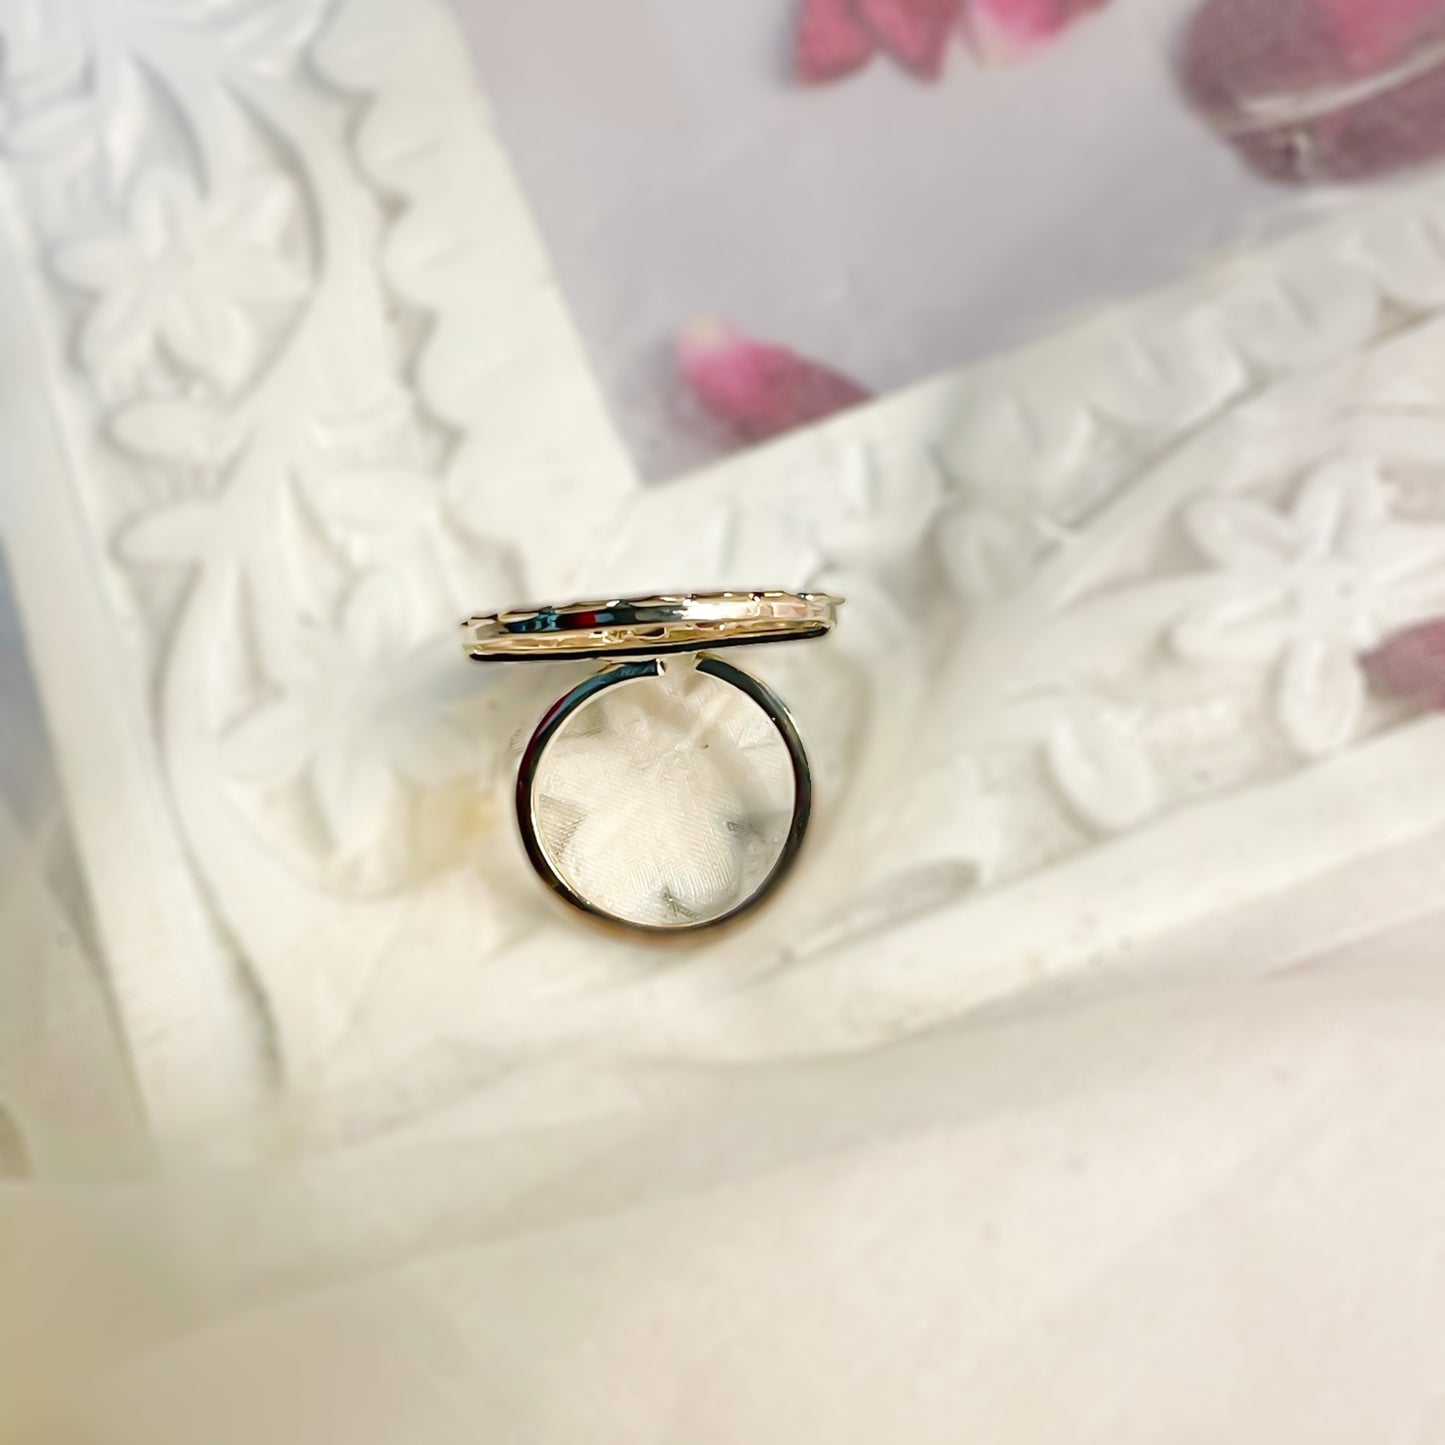 Maahi with Fuschia stones - Shiny Silver Ring